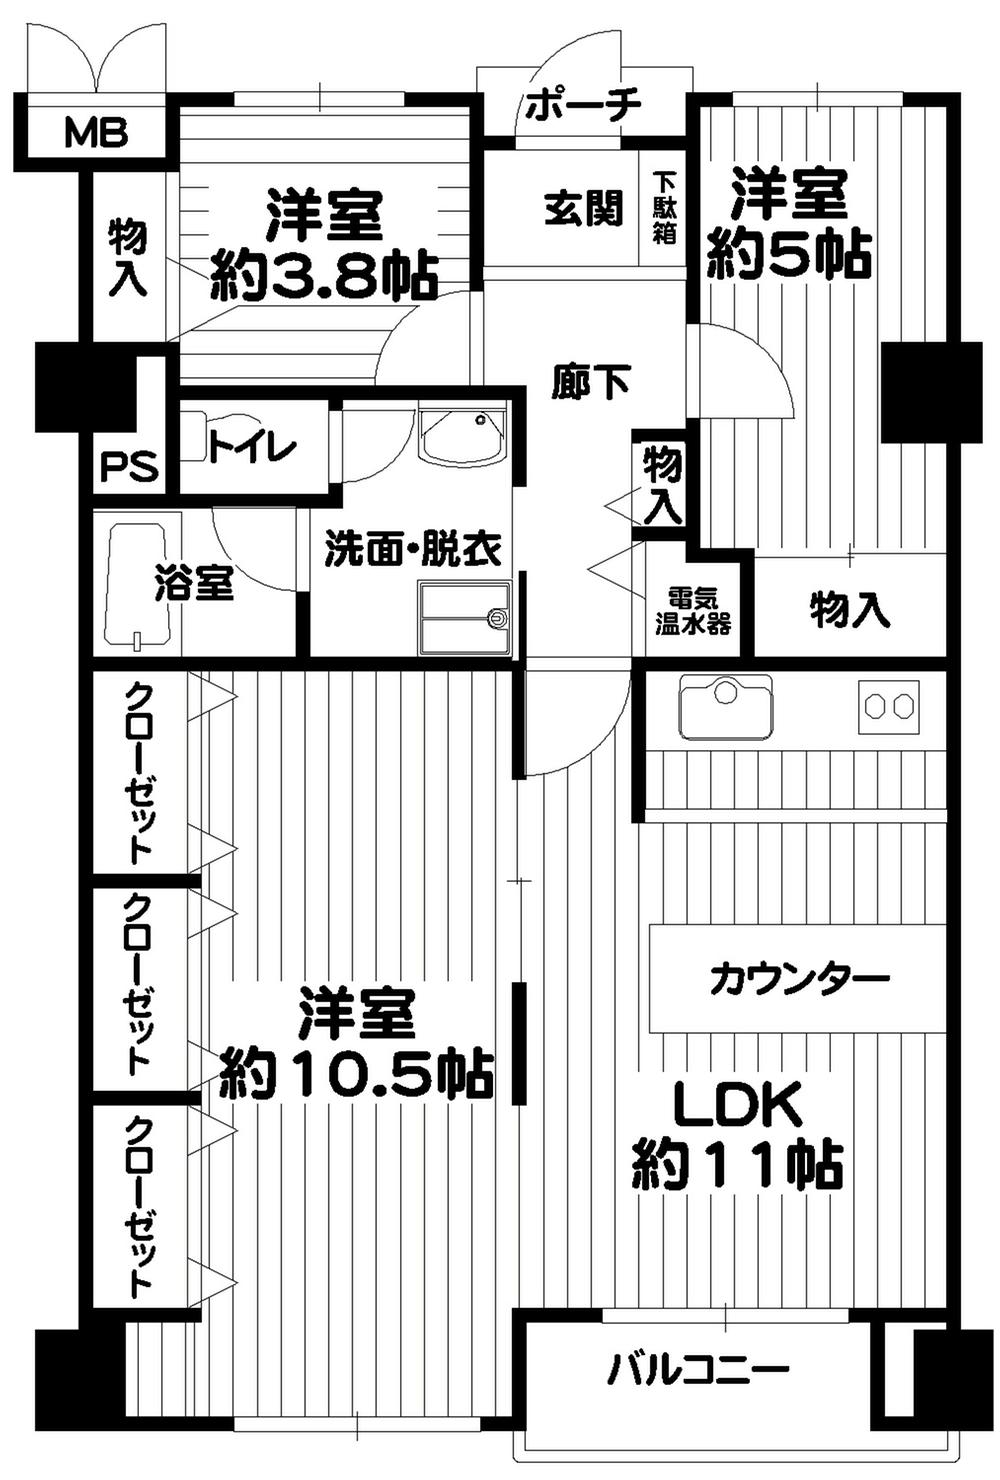 Floor plan. 3LDK, Price 16 million yen, Occupied area 76.72 sq m , Balcony area 3.62 sq m